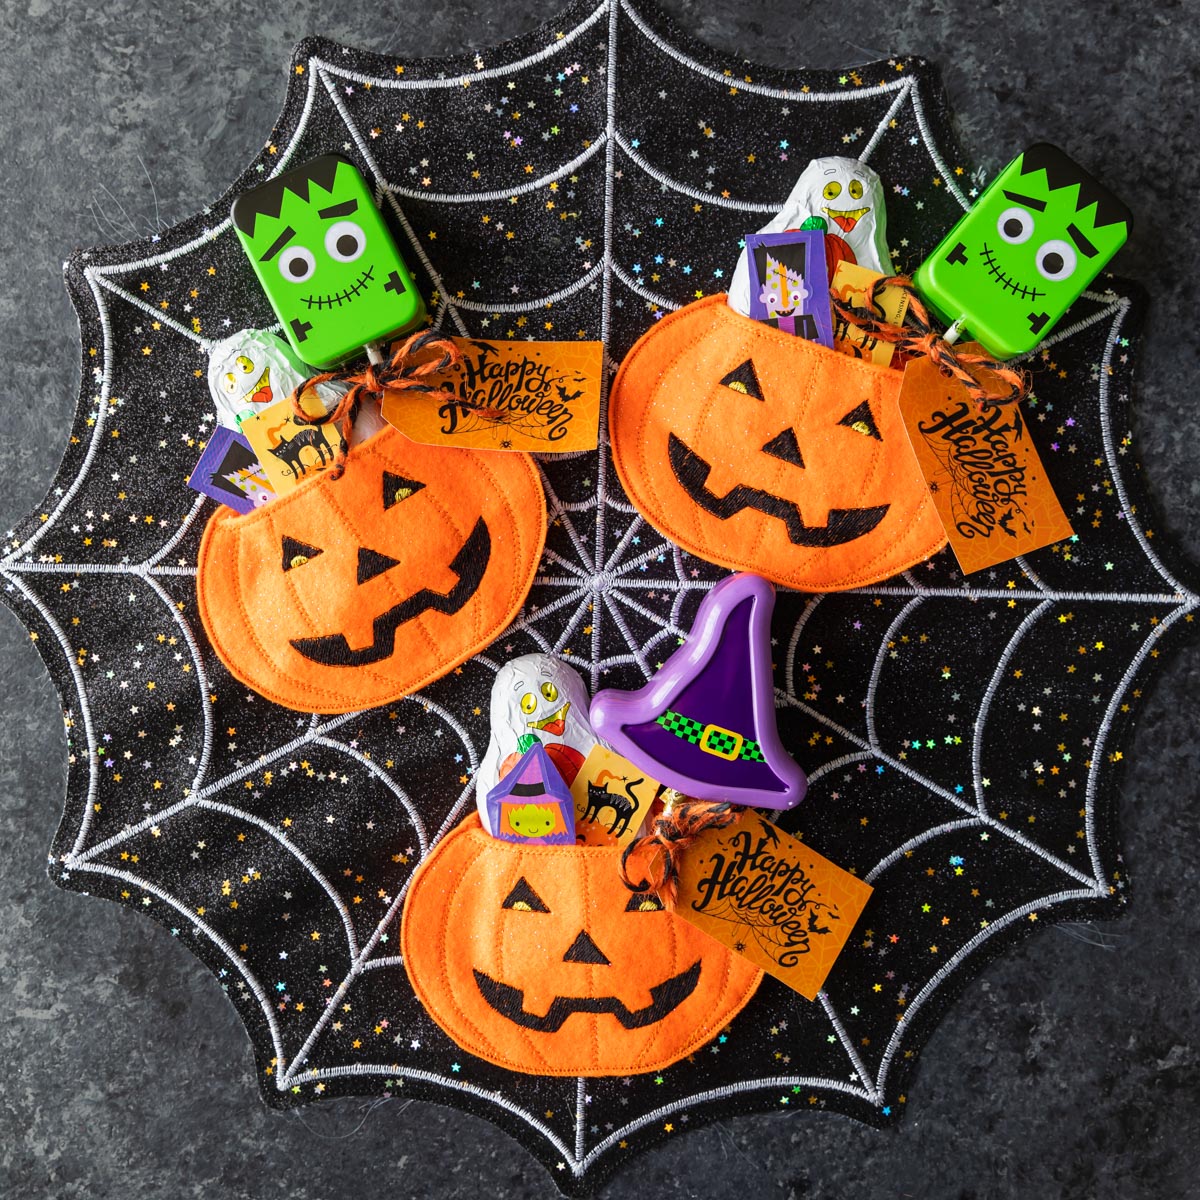 jack-o-lantern felt treat bag filled with Halloween candy